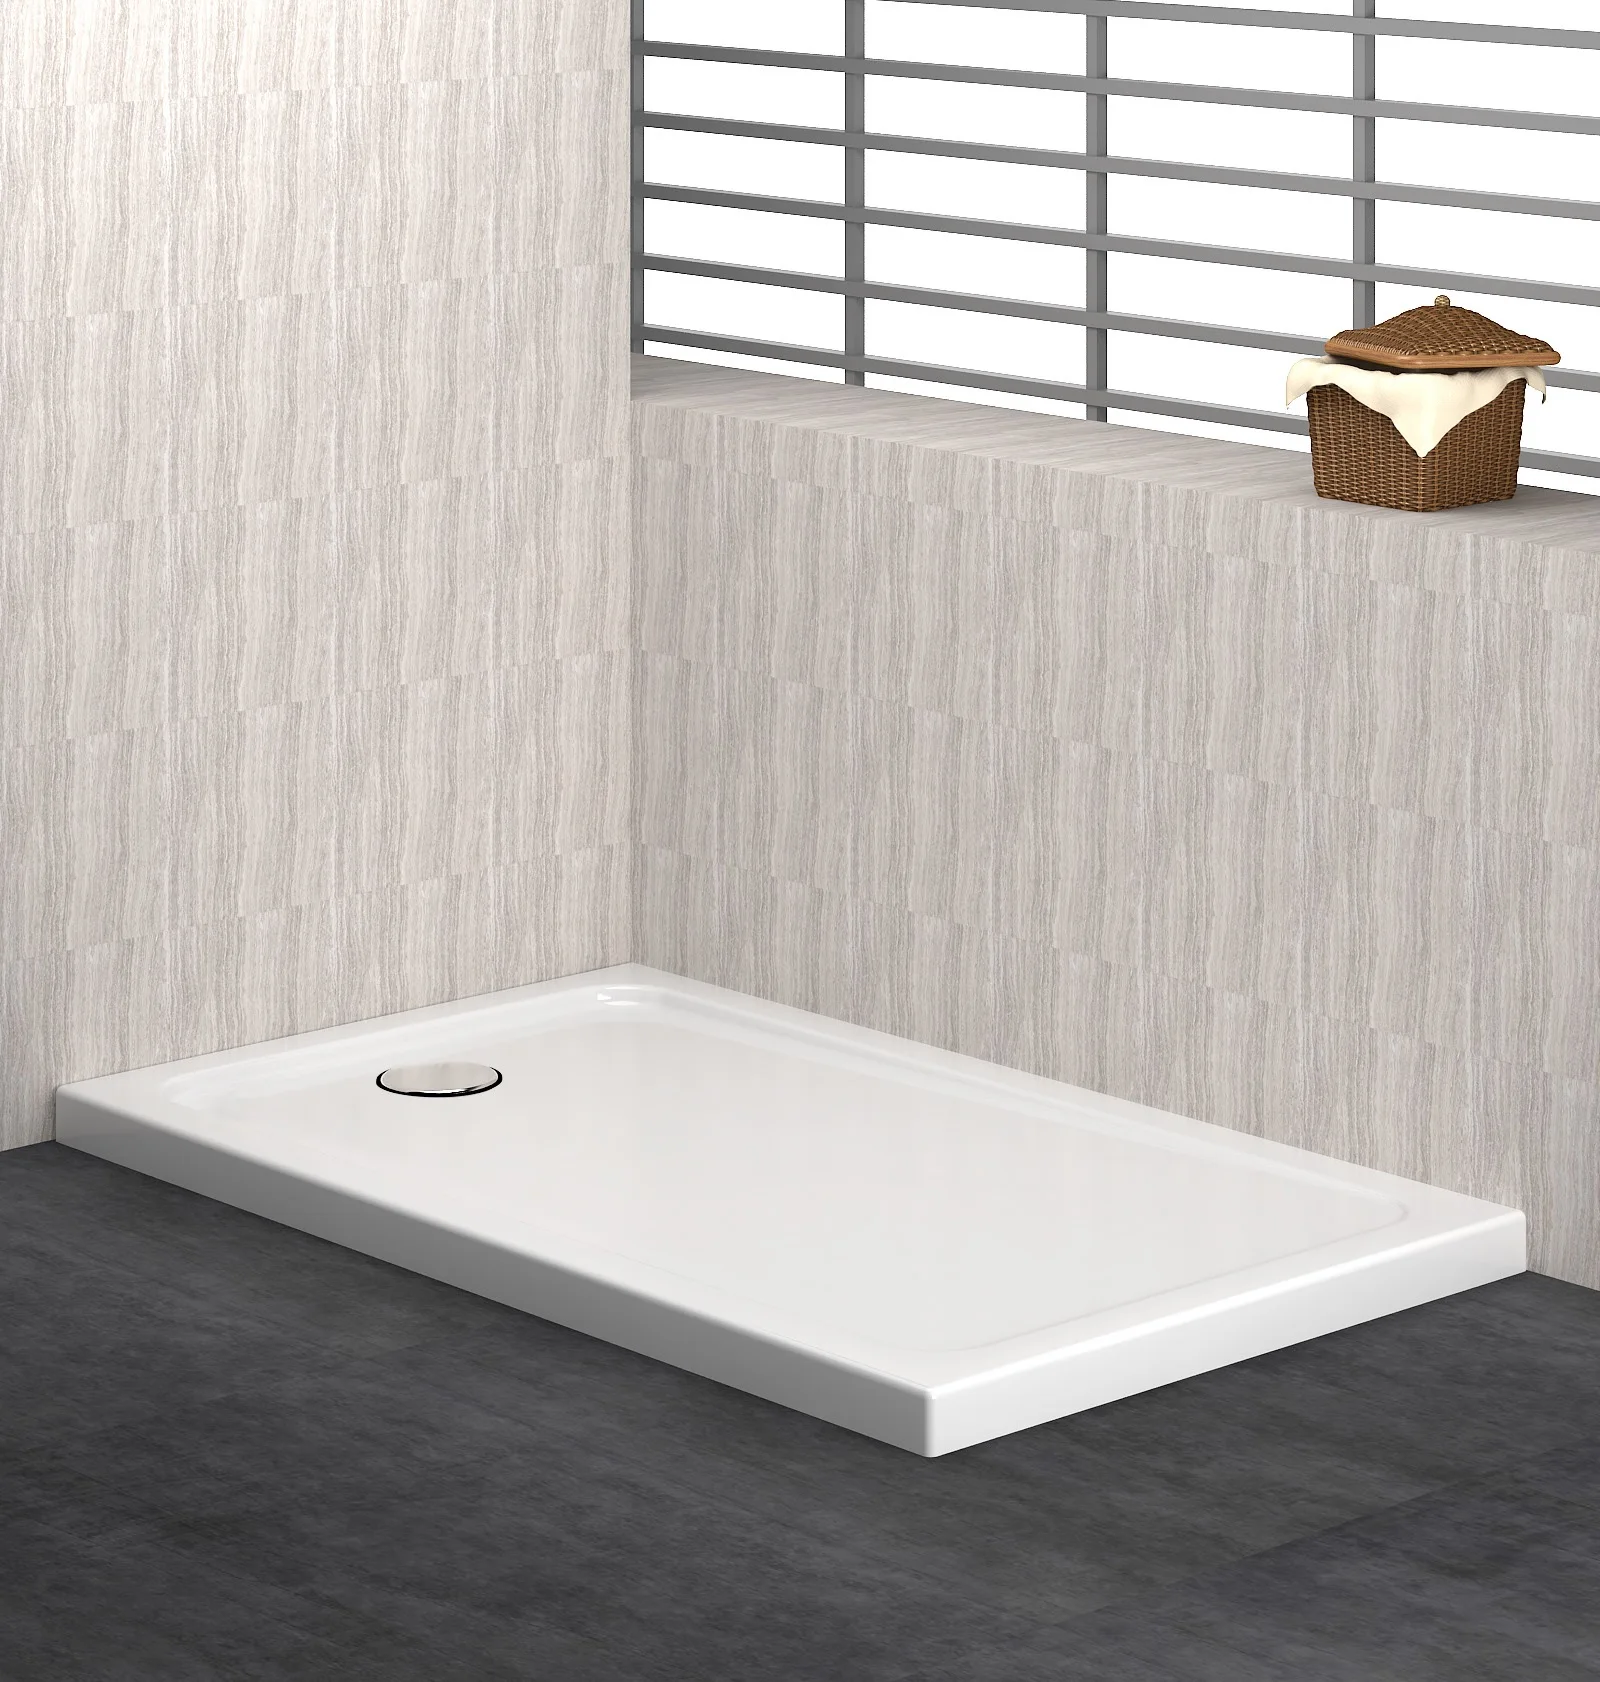 
Rectangular Acrylic Deep Monoblock Slim Flat Bath Base Shower Tray 